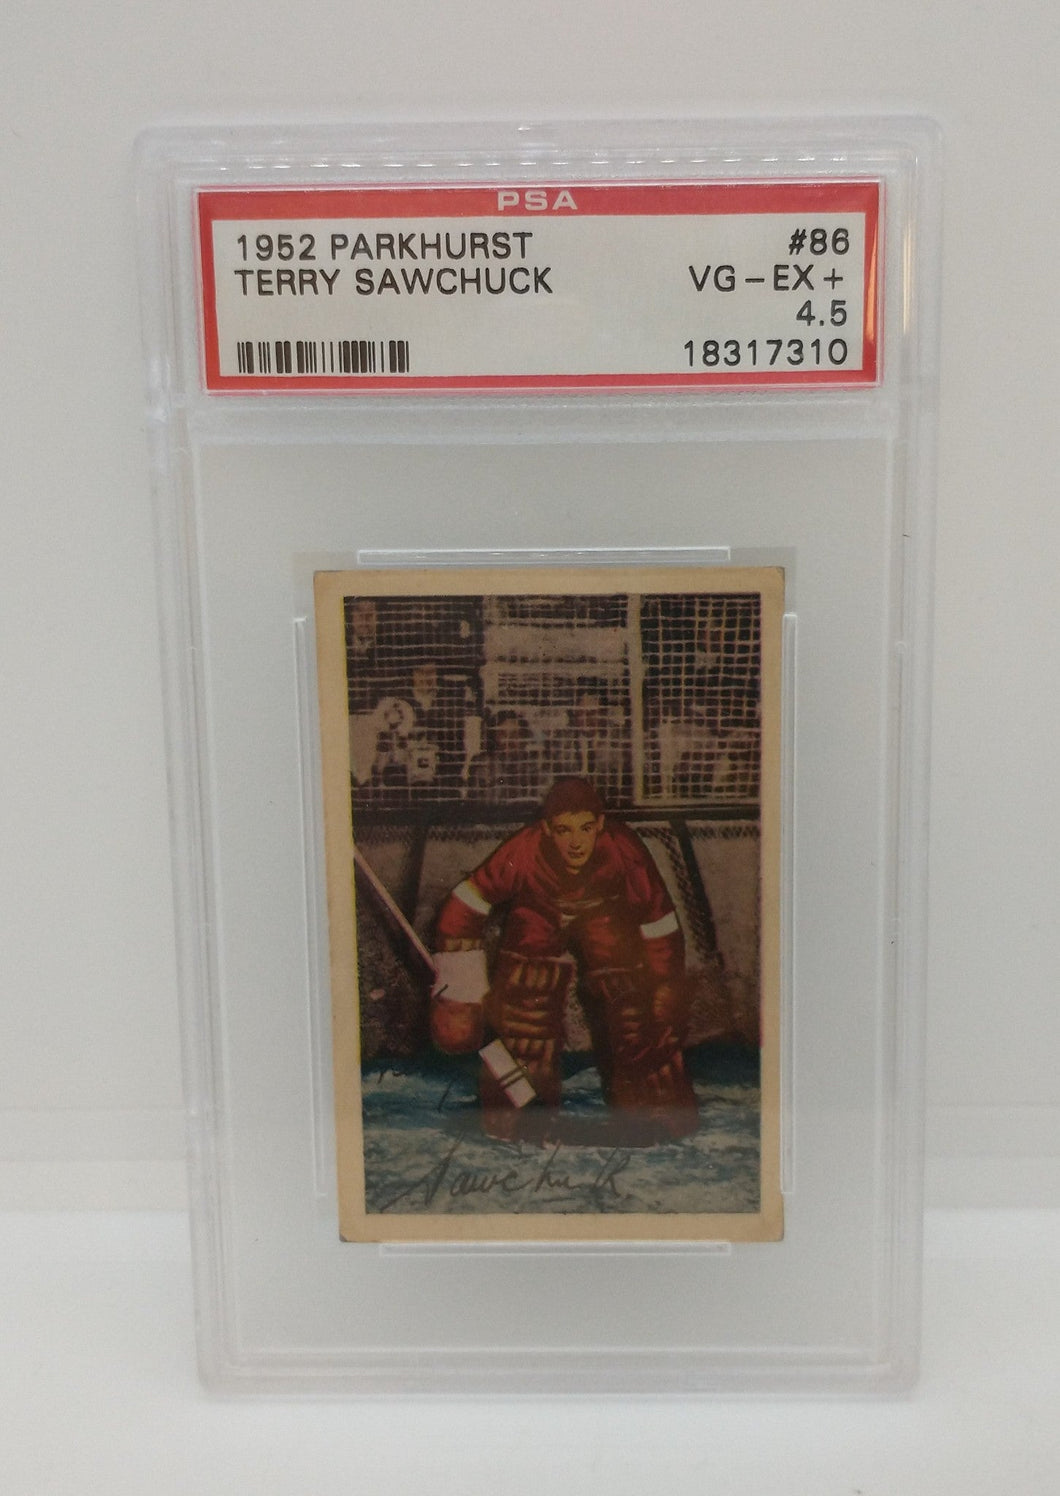 1952 Parkhurst Terry Sawchuck #86 PSA Graded VG-EX+ 4.5 Card - Solid Centering